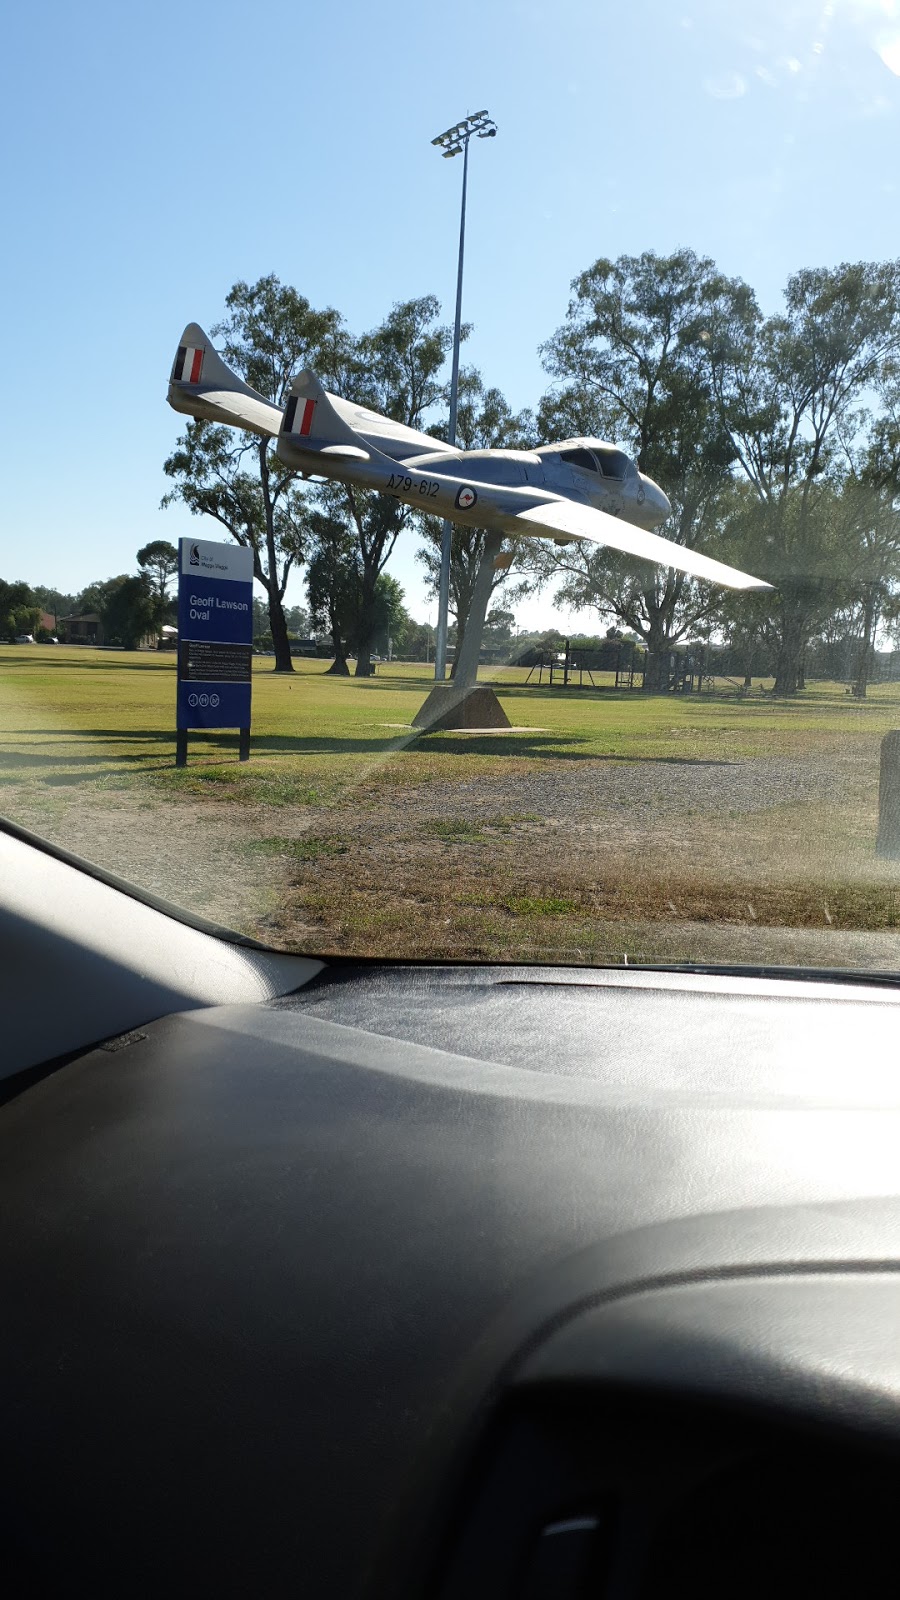 Geoff Lawson Oval | Wagga Wagga NSW 2650, Australia